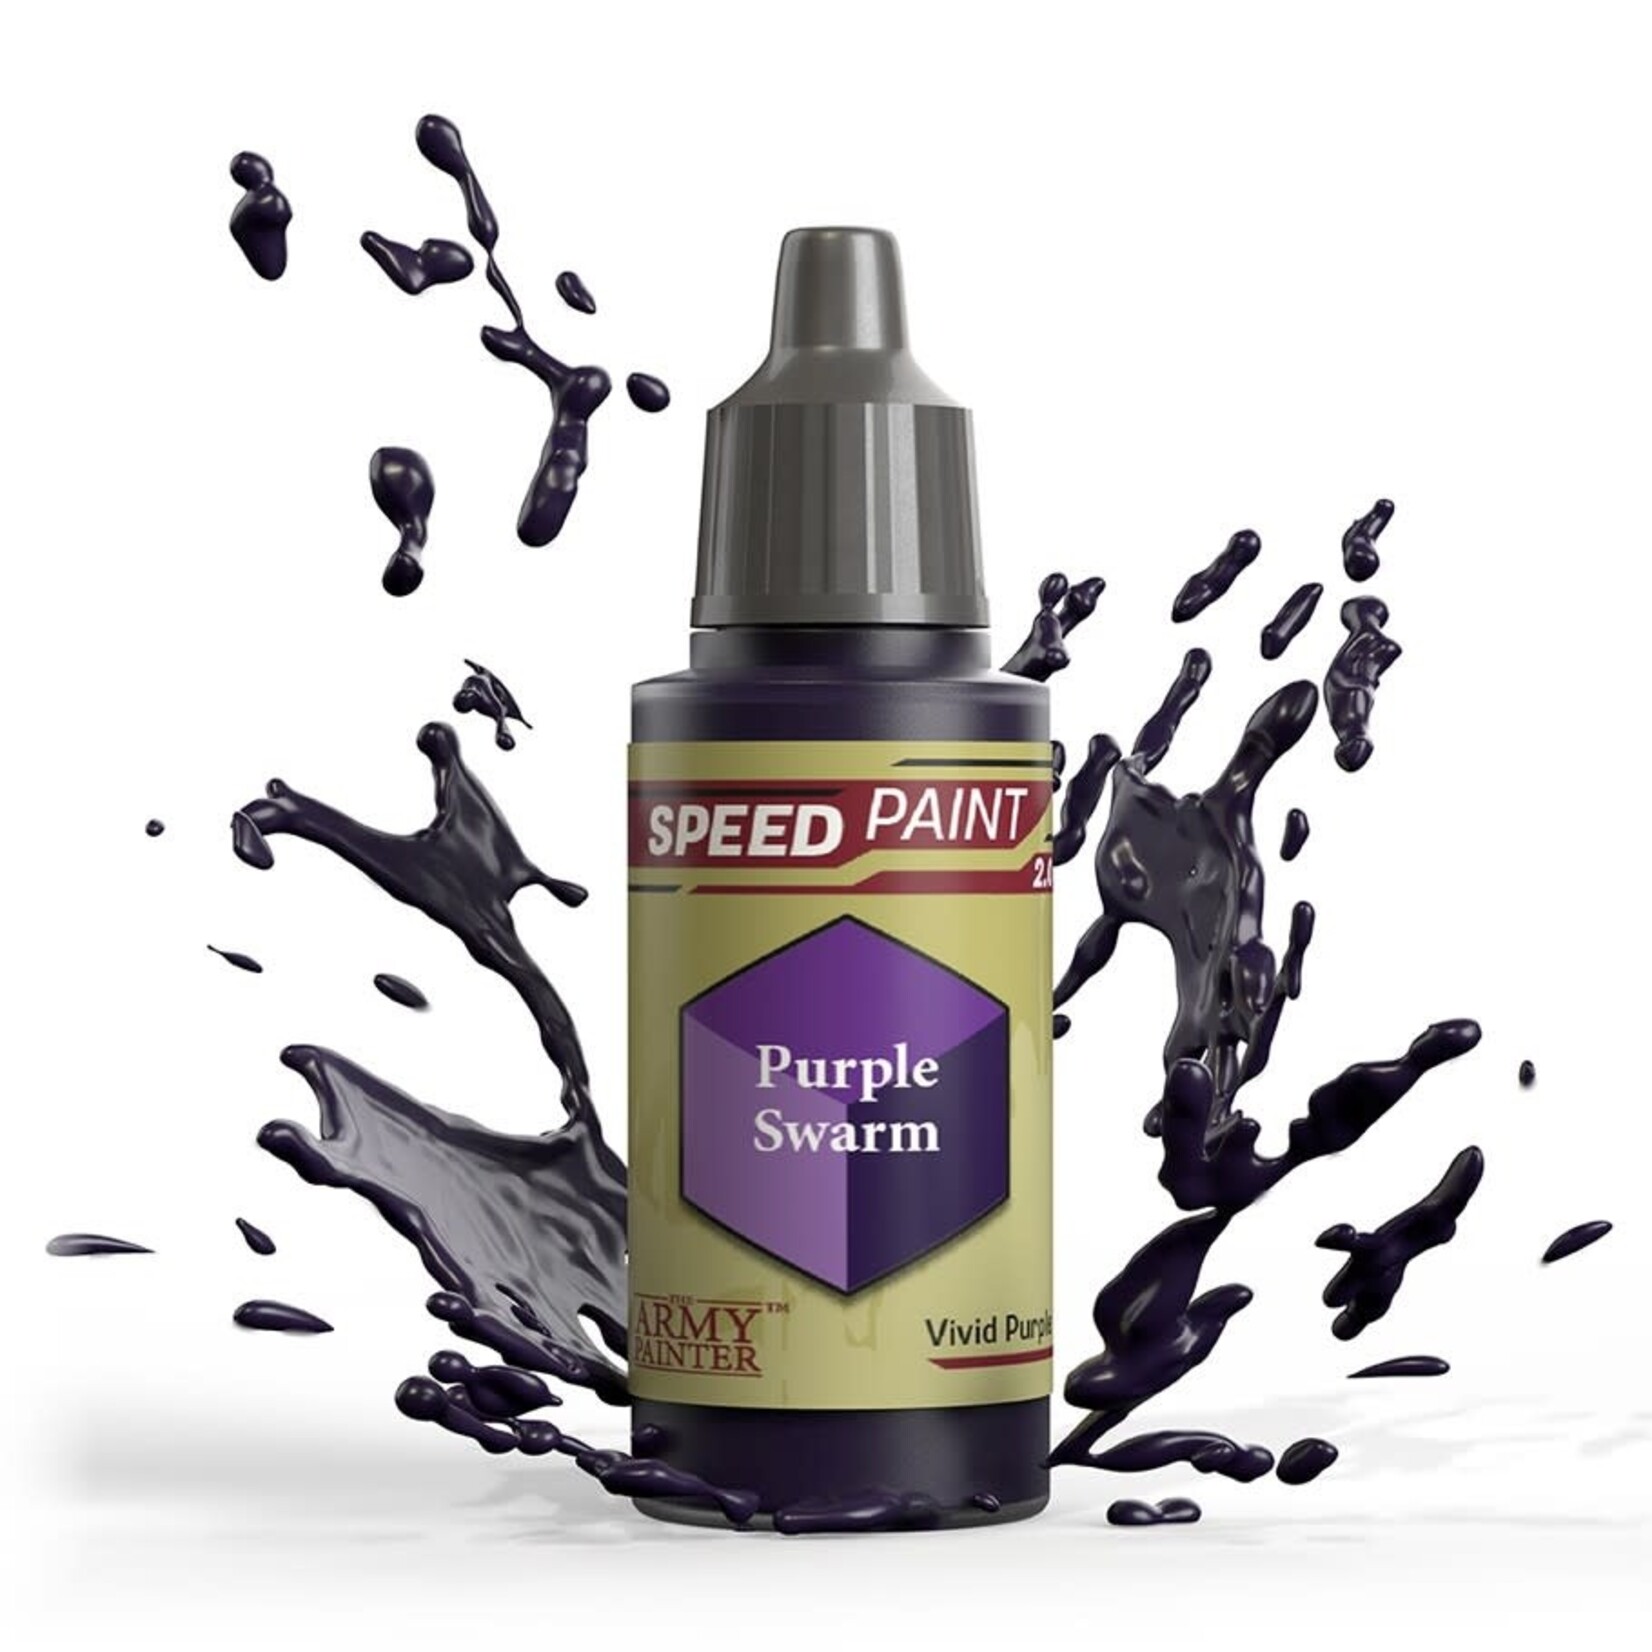 The Army Painter Speedpaint: Purple Swarm